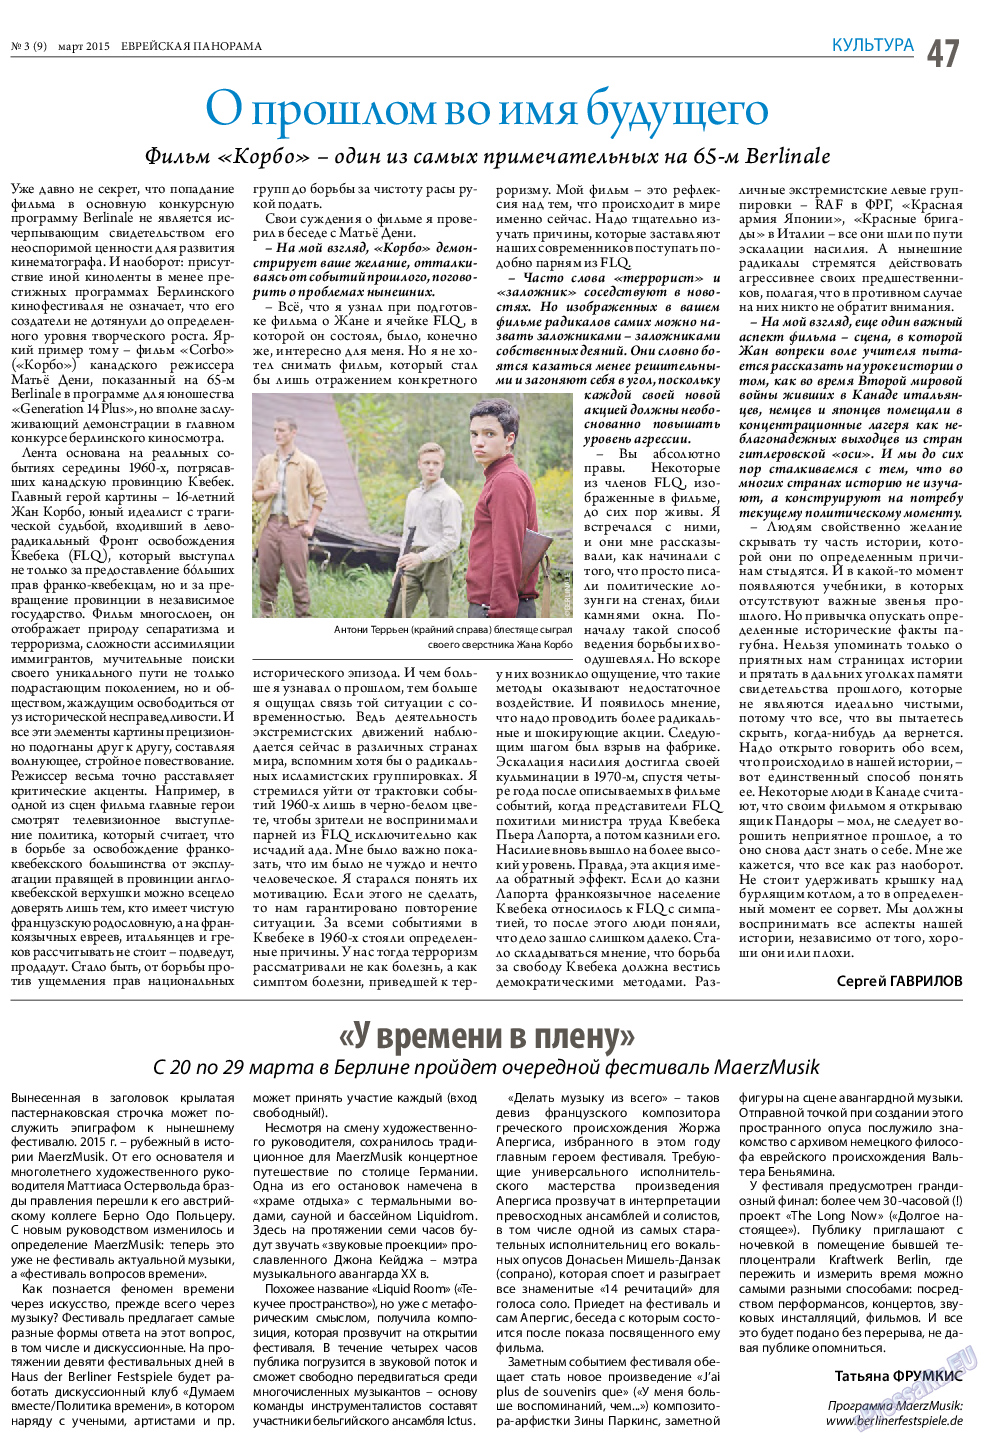 Еврейская панорама, газета. 2015 №3 стр.47